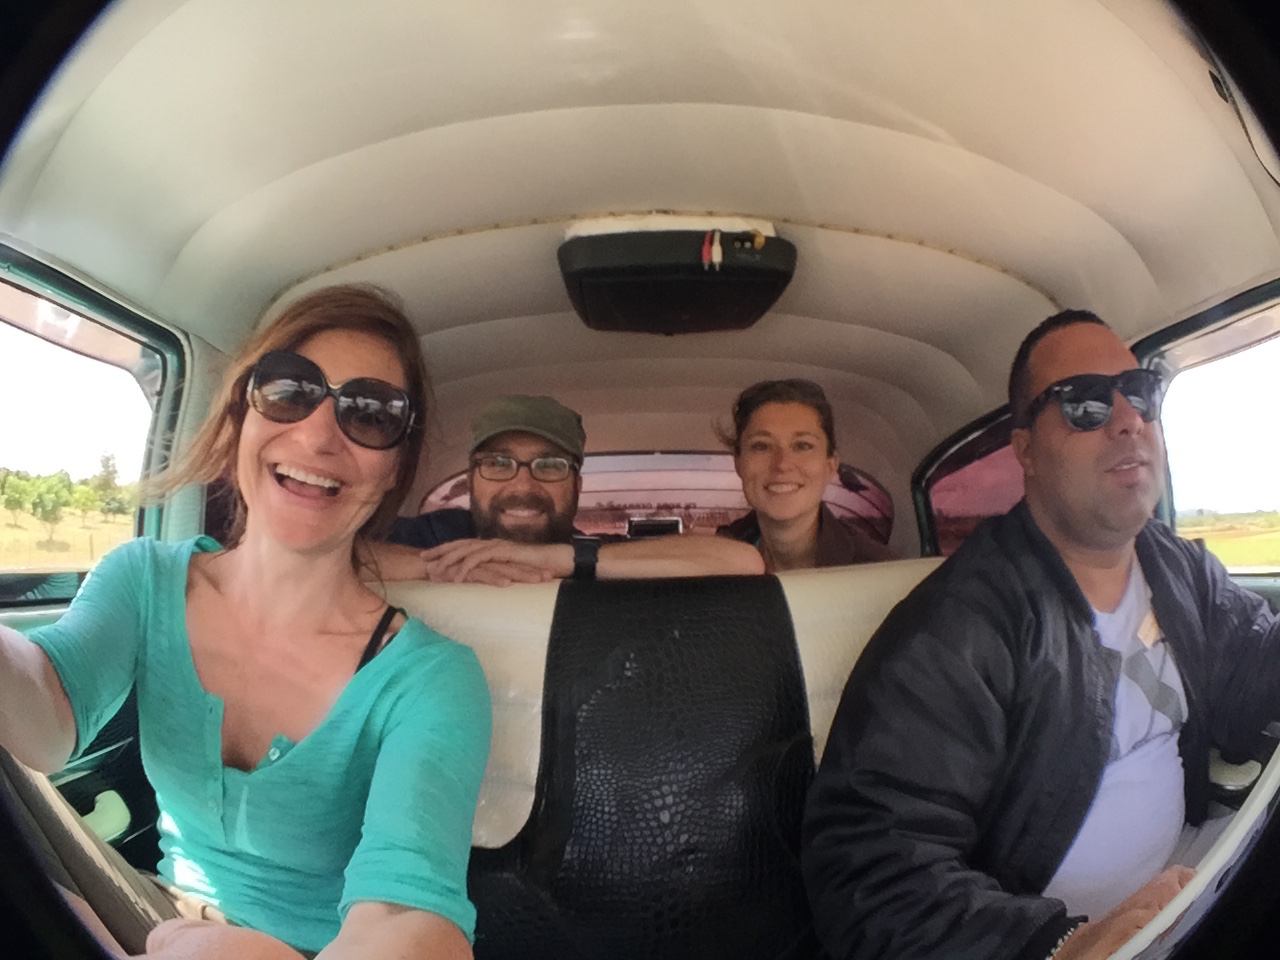 Bester Laune im neuen Taxi nach Havanna: Nicole, Dominik und Claudia